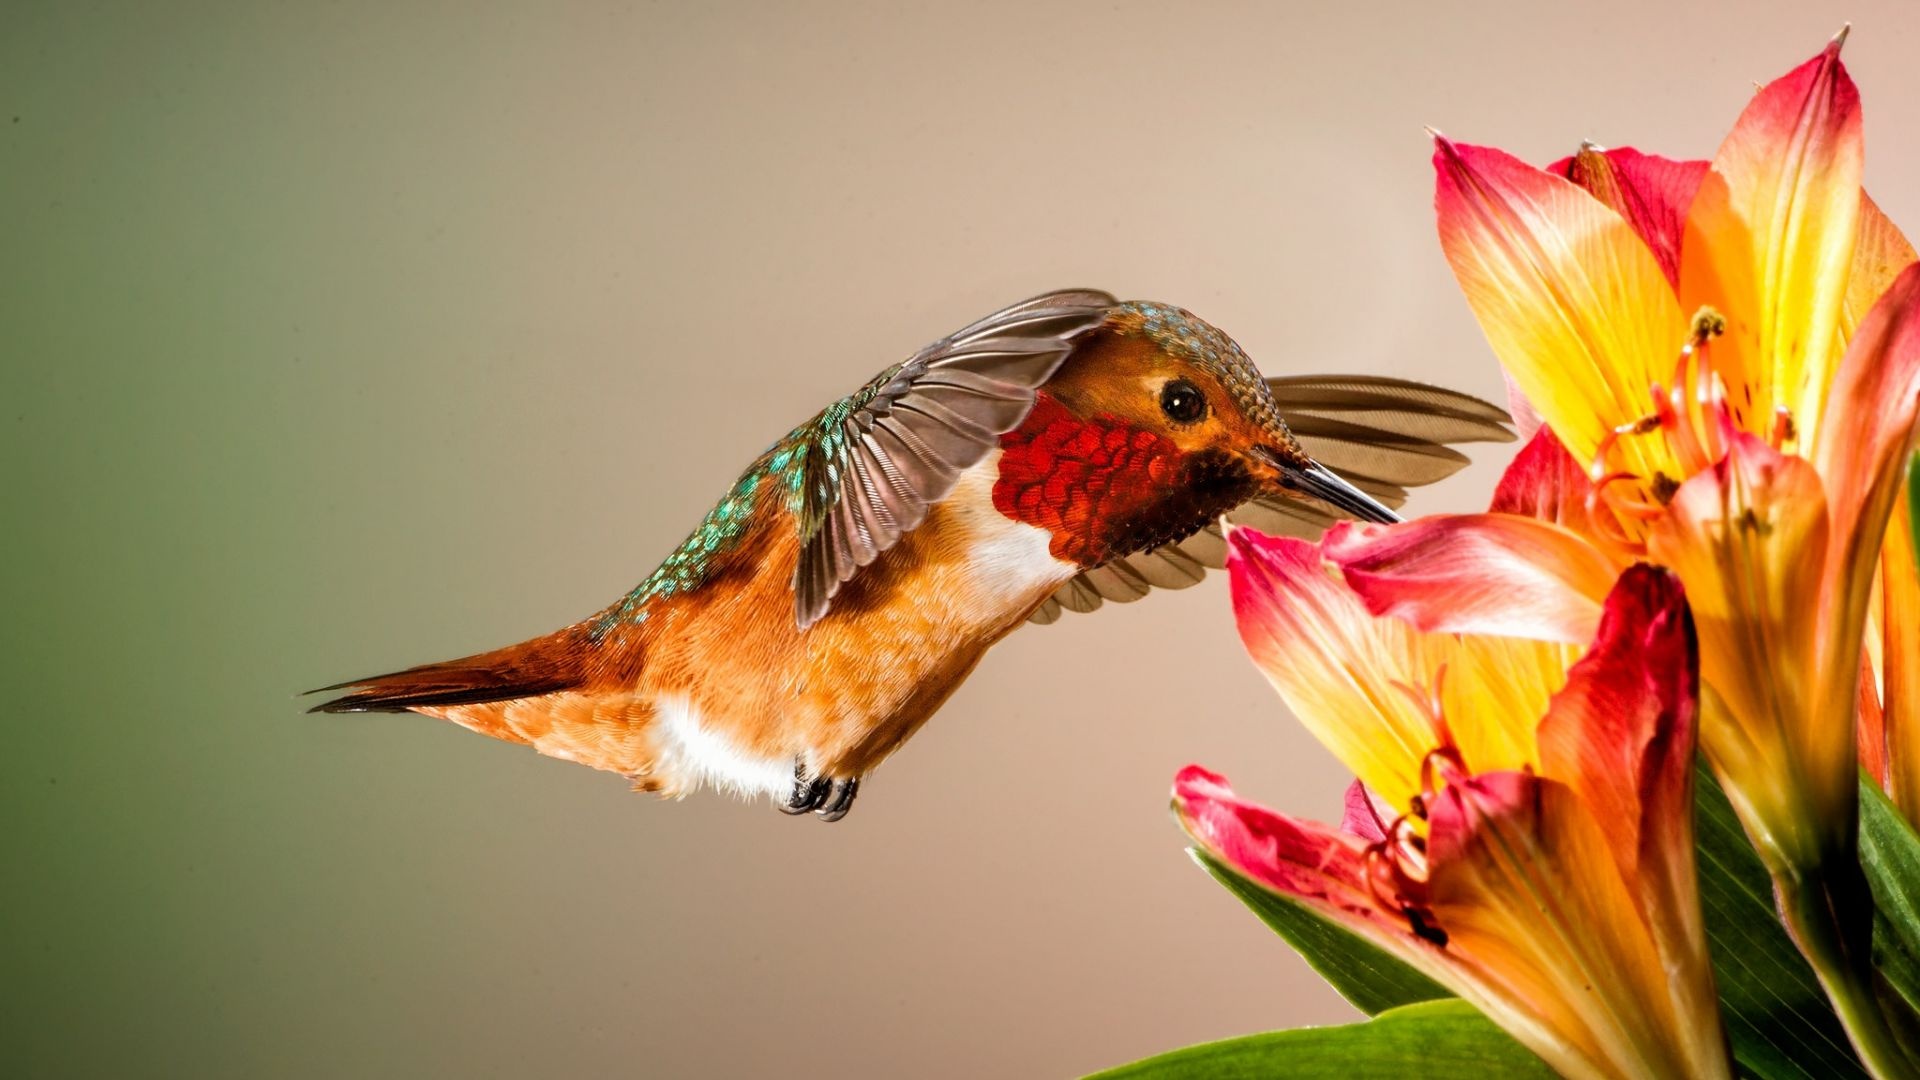 Hummingbird, Up-close encounter, Floral paradise, Captivating image, 1920x1080 Full HD Desktop